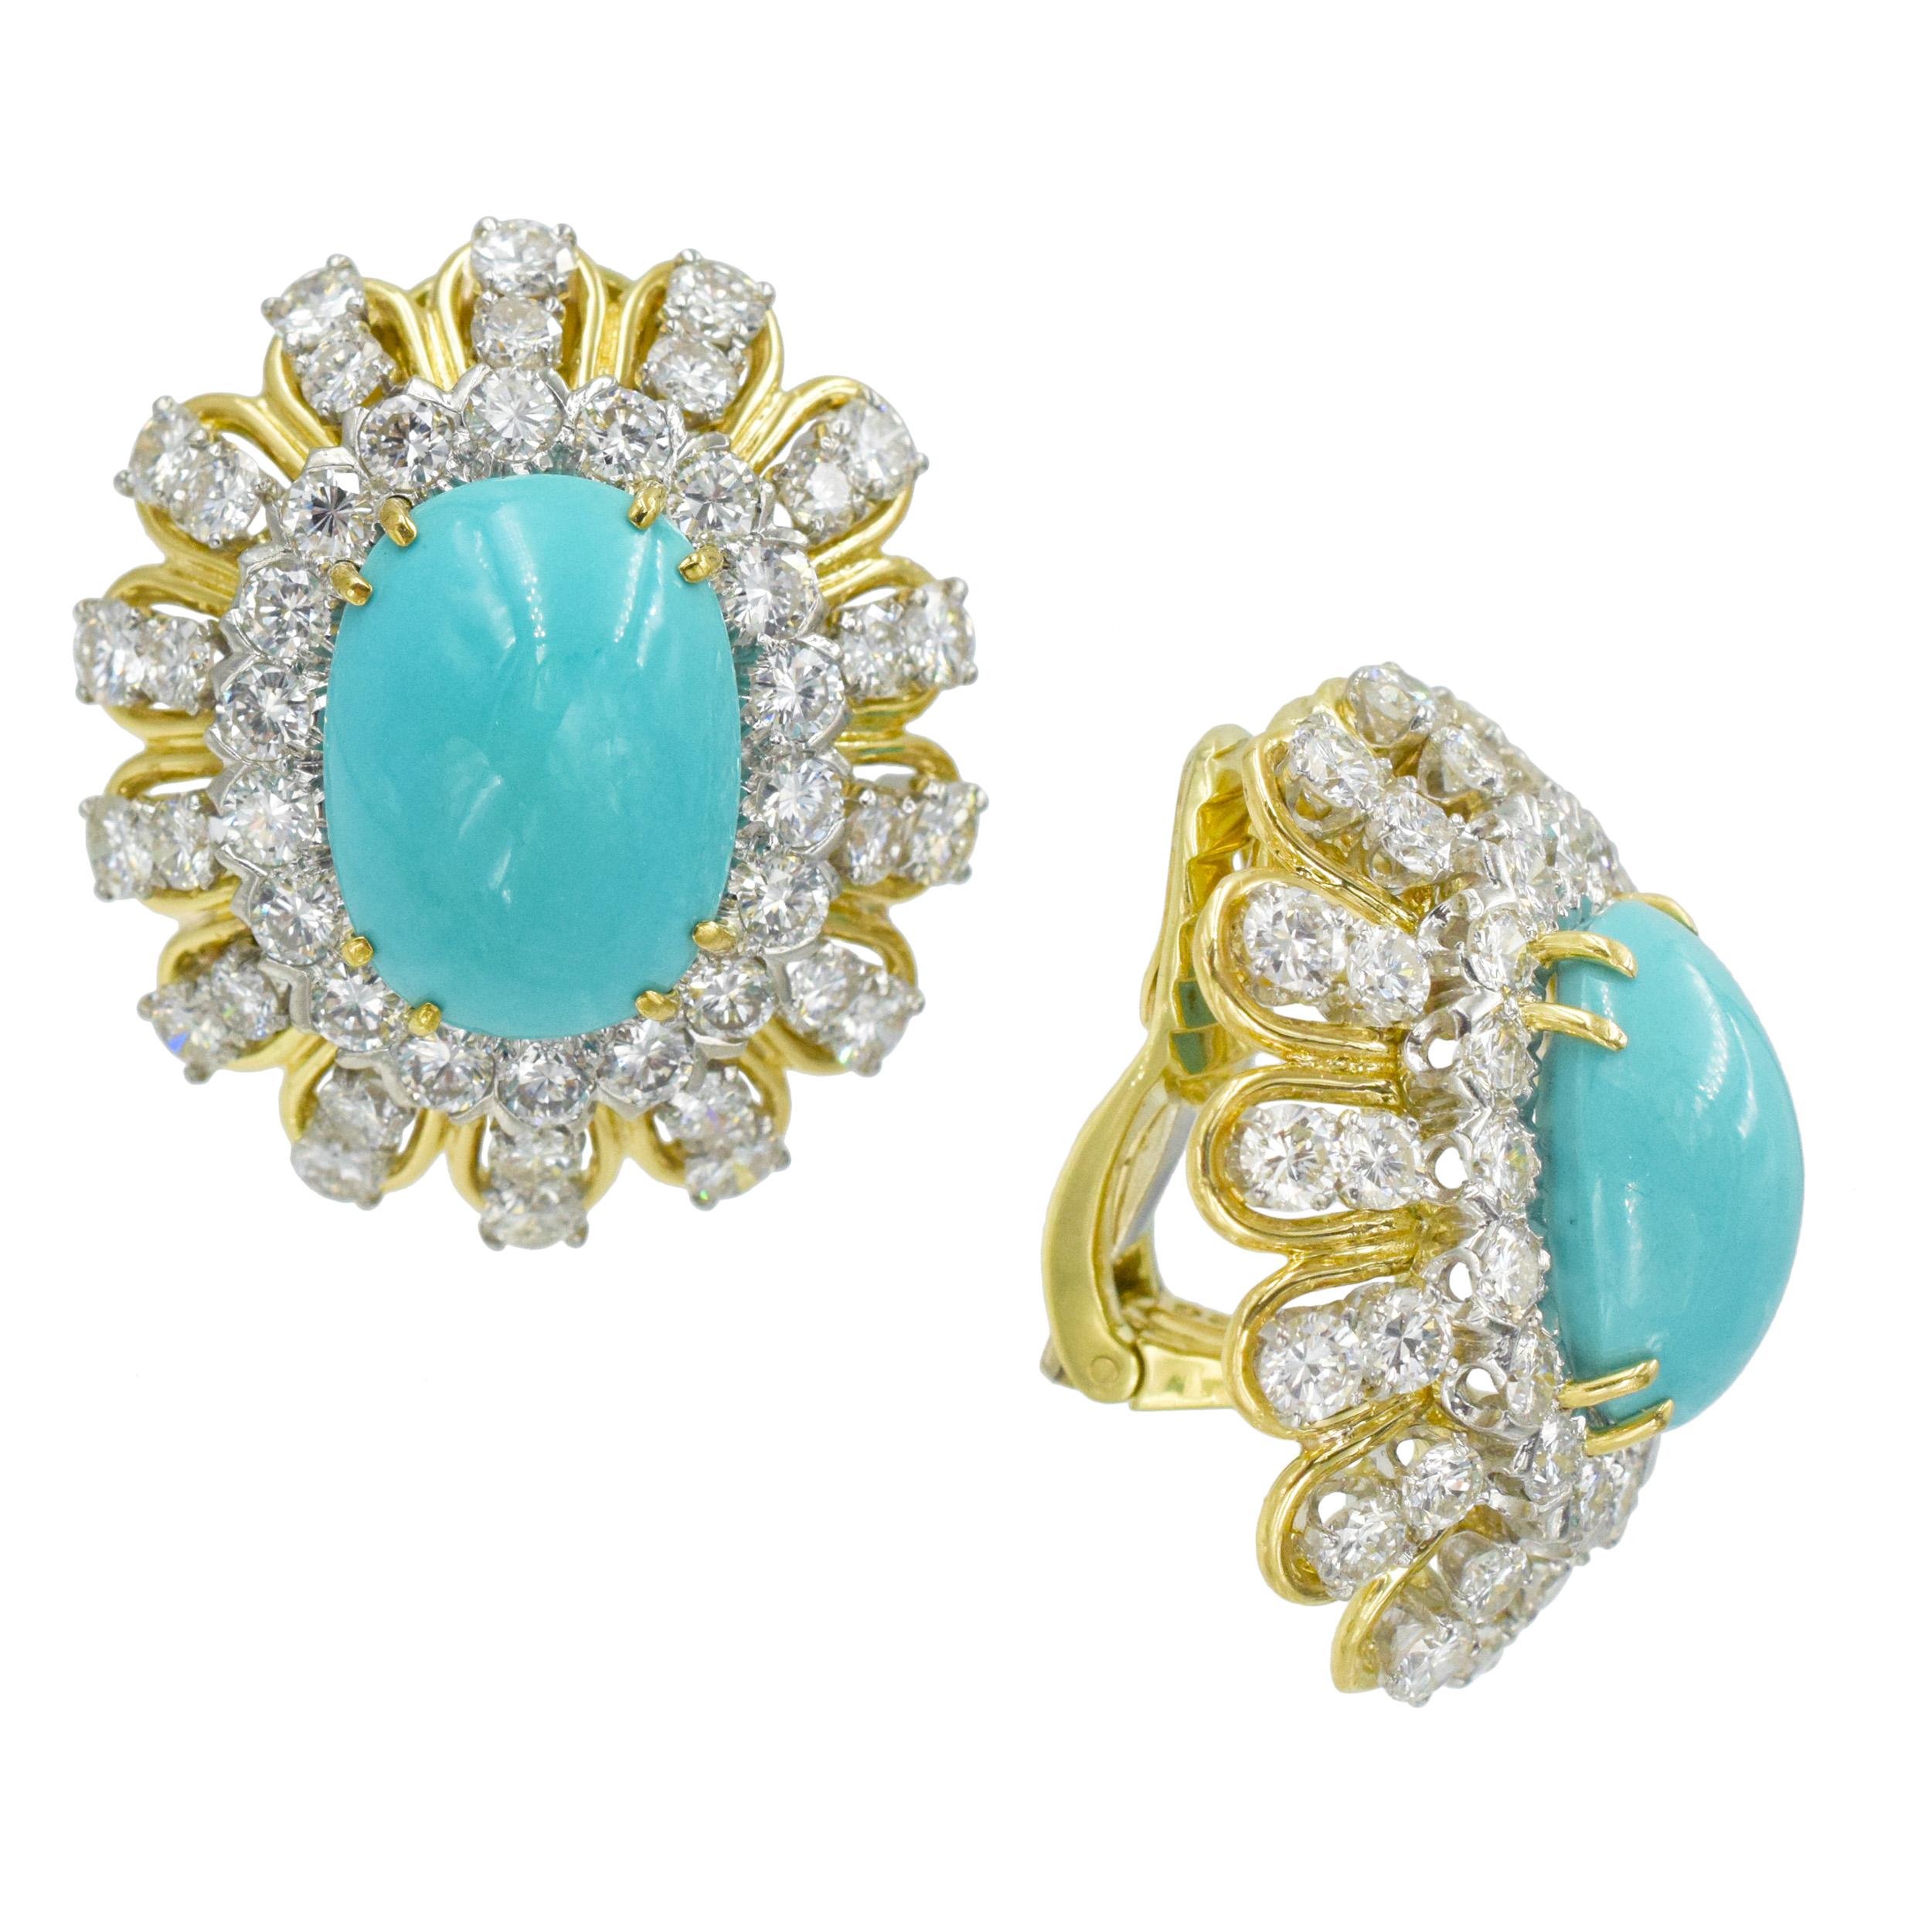 Oval Cut David Webb Turquoise and Diamond Earrings